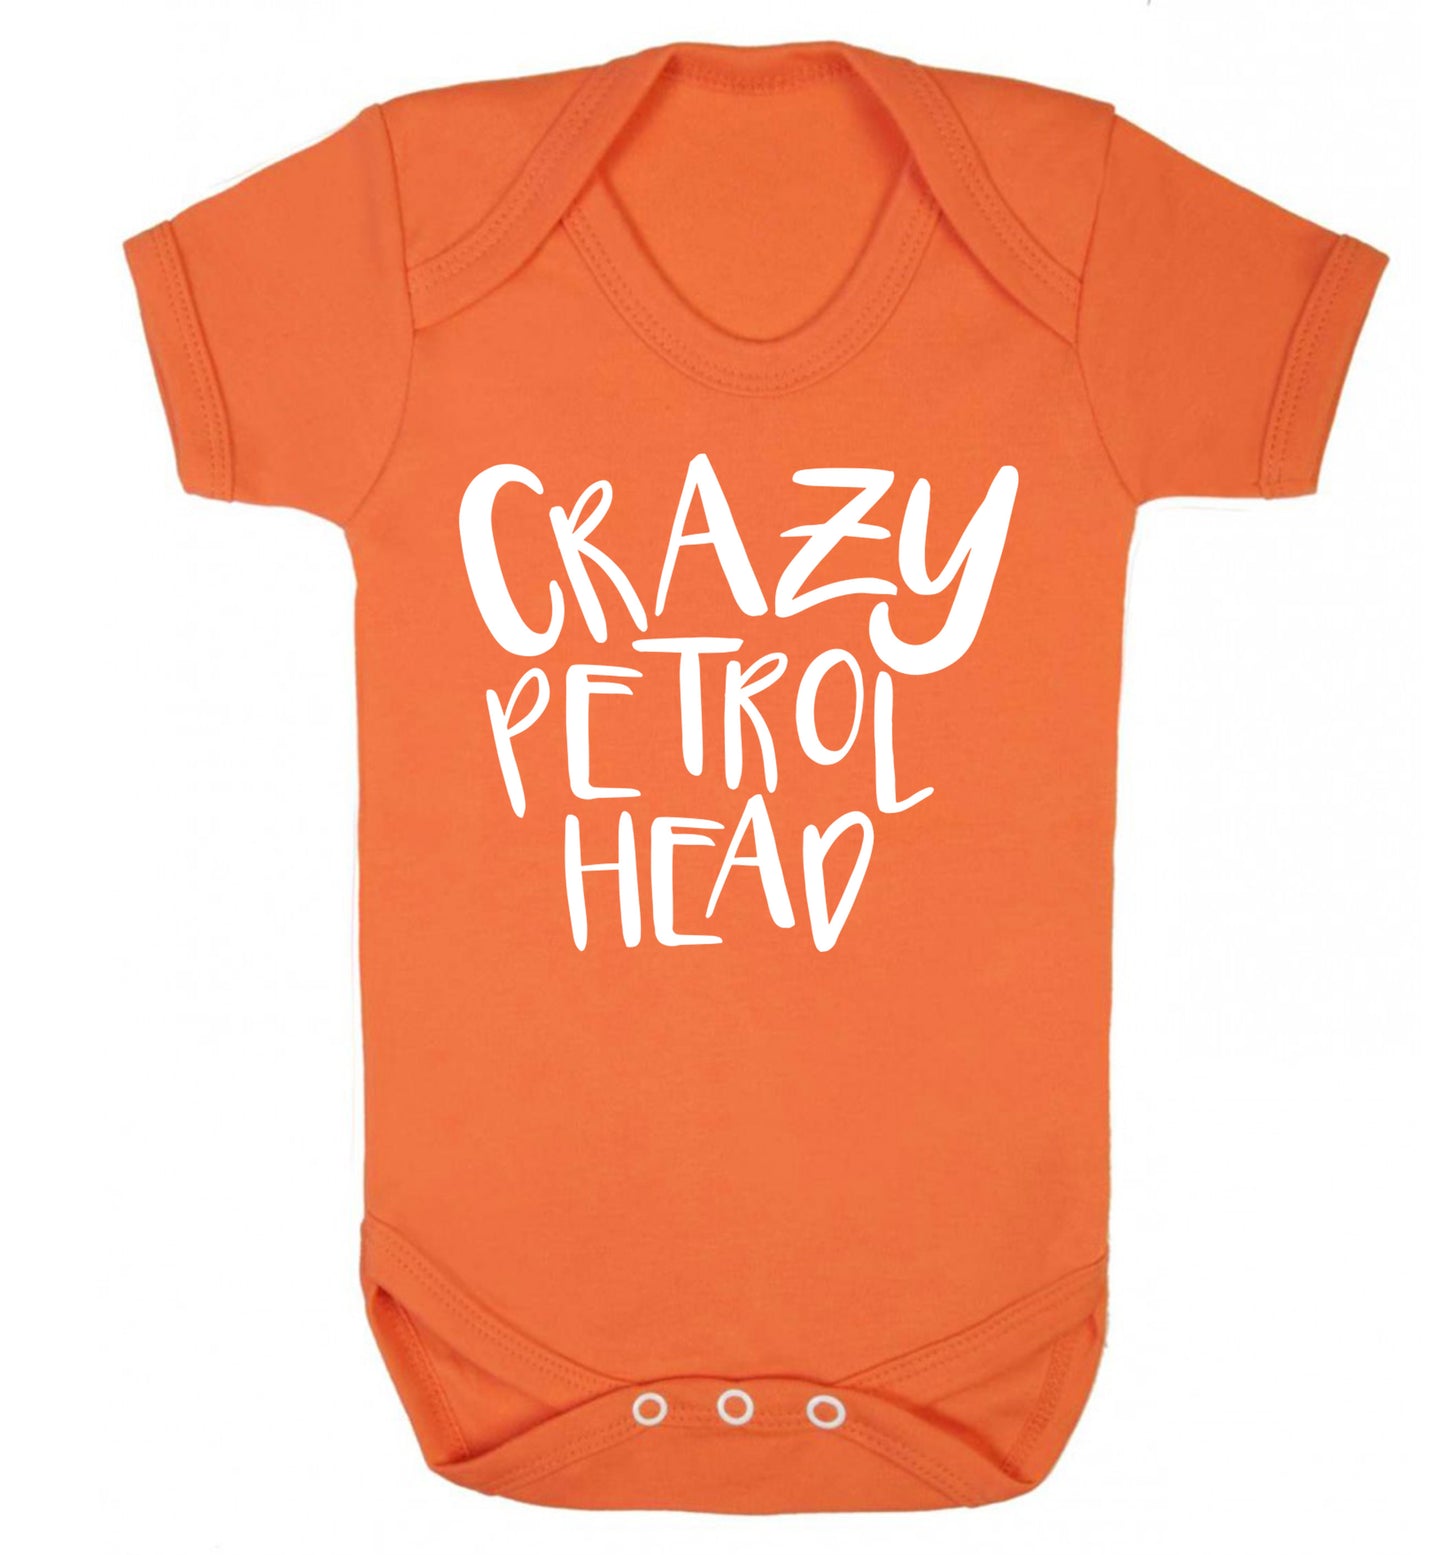 Crazy petrol head Baby Vest orange 18-24 months